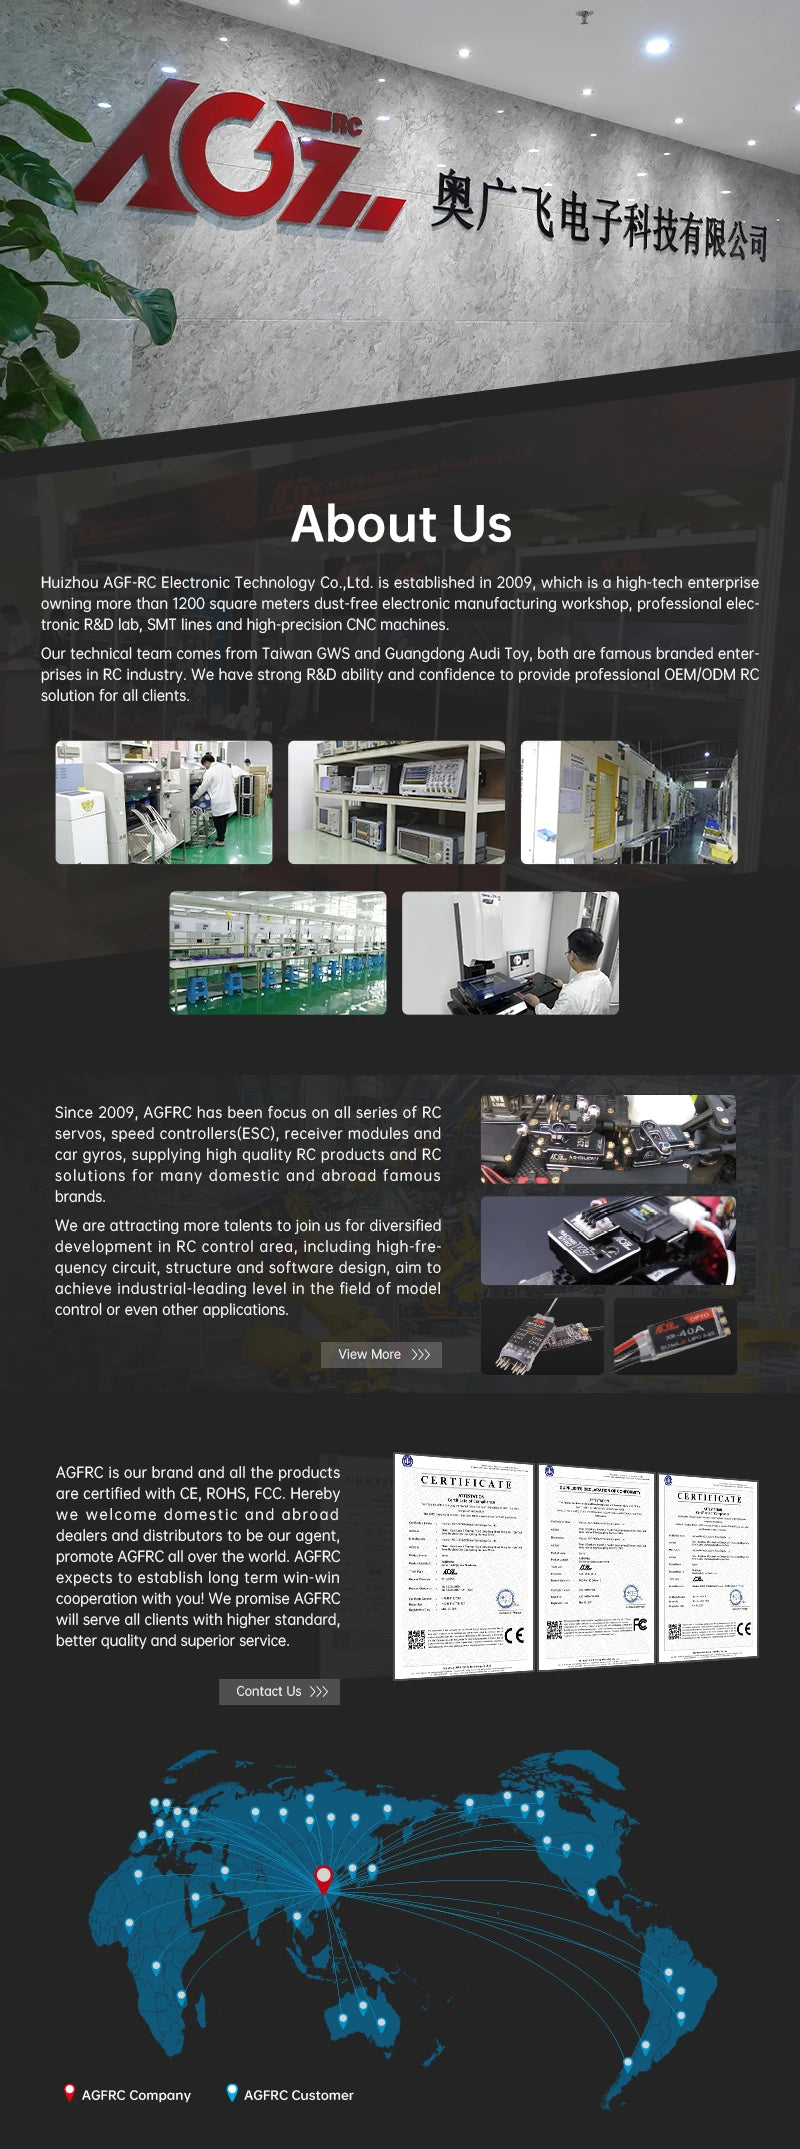 AGFRC A73CHLW Limit Edition, Huizhou AGF-RC Electronic Technology Ltd is a high-tech enterprise .